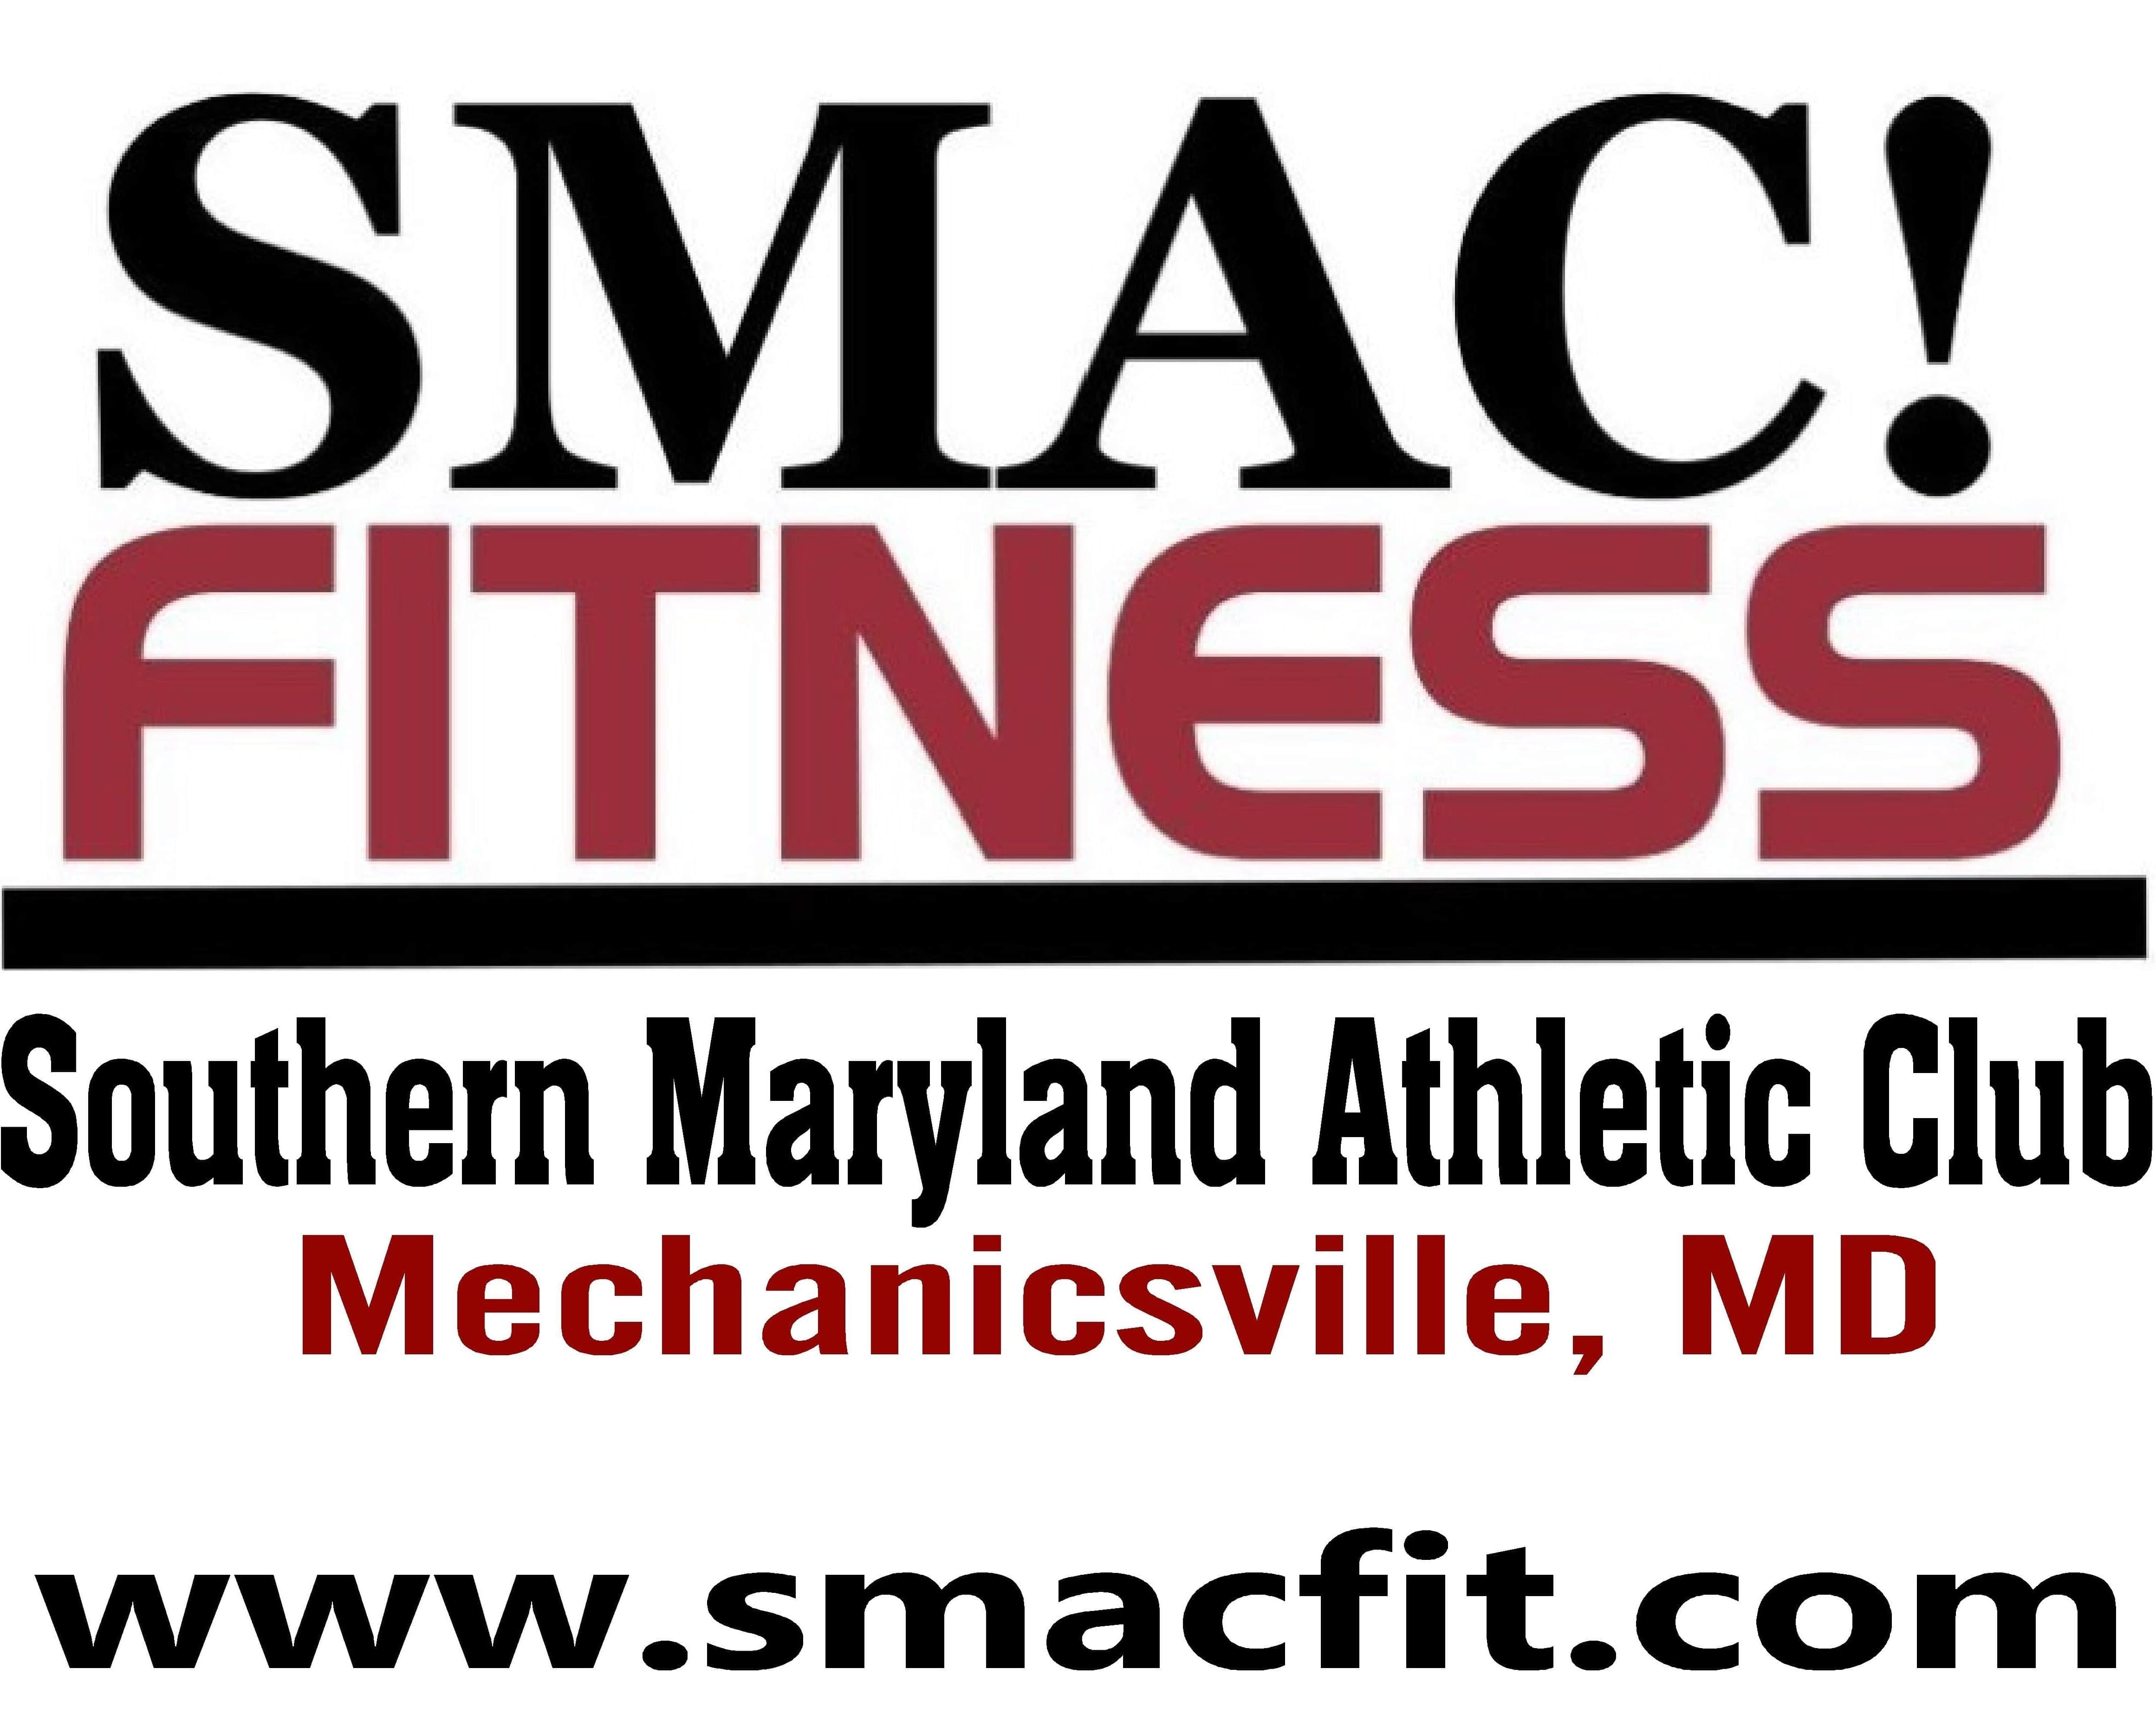 Southern Maryland Athletic Club